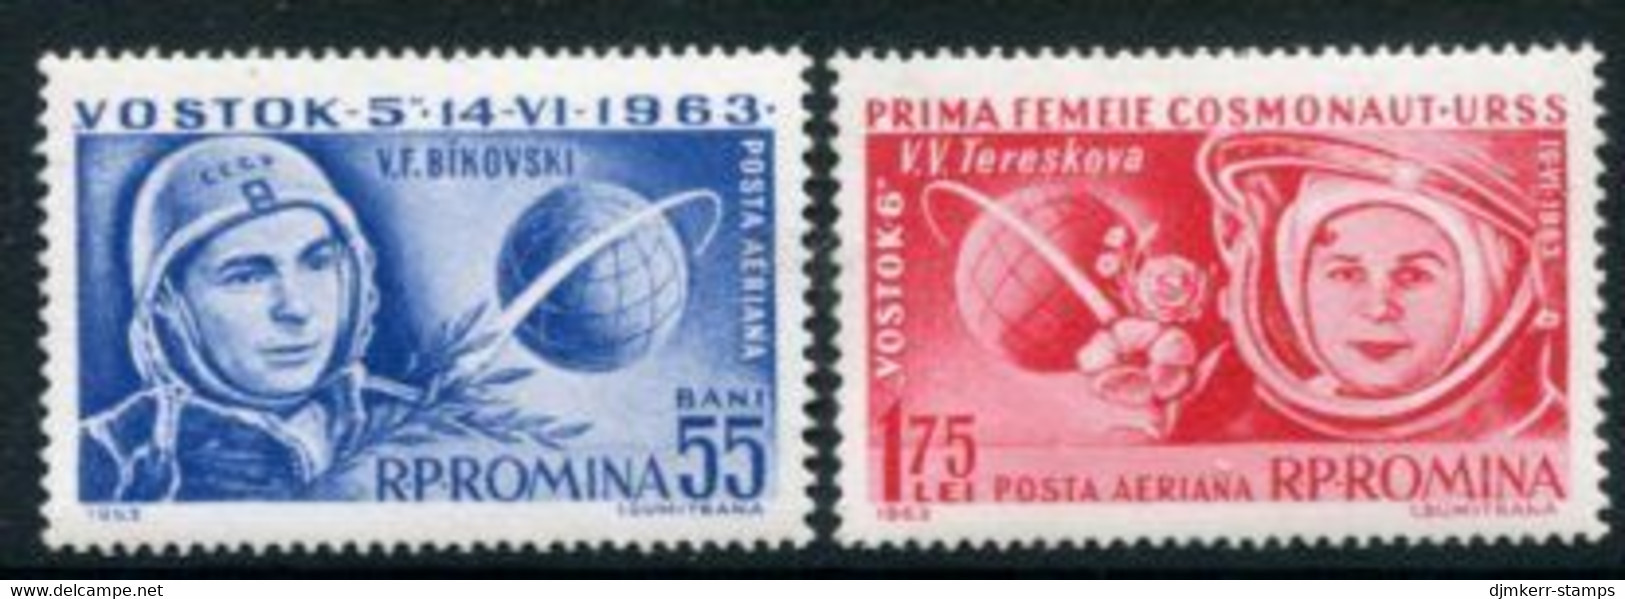 ROMANIA 1963 Vostok 5 And 6 Space Flights MNH / **.  Michel 2171-72 - Ongebruikt